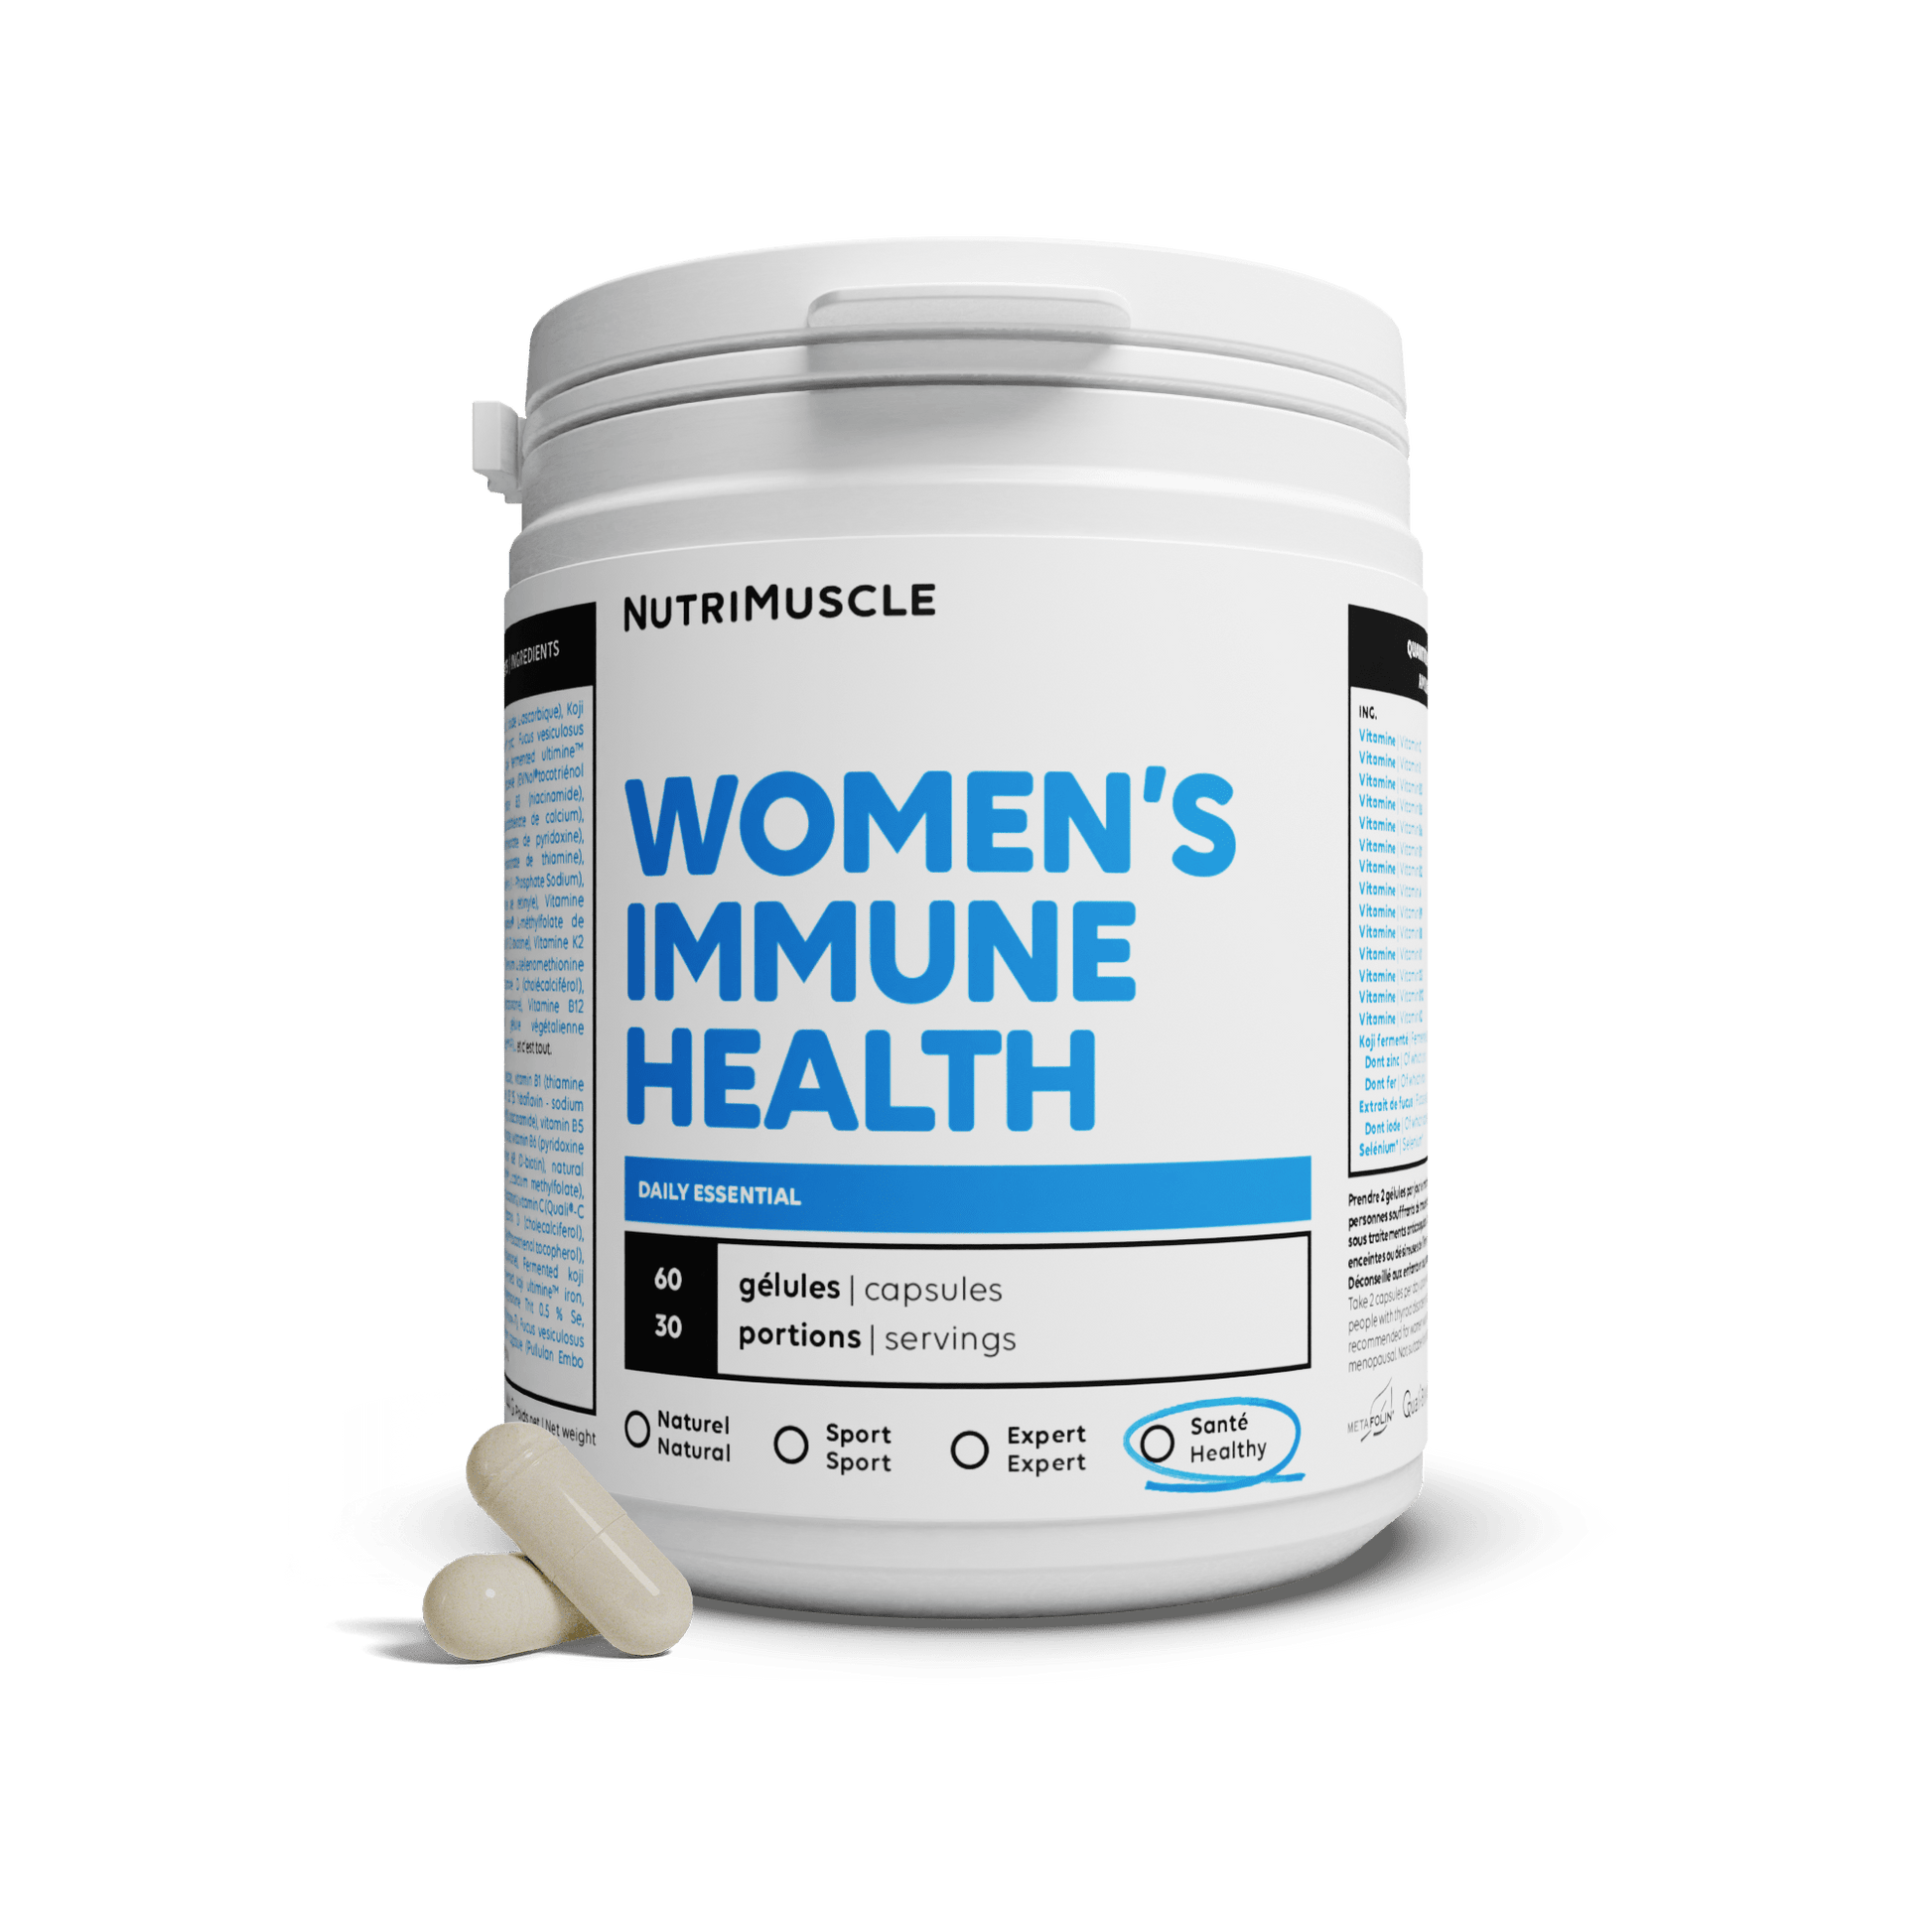 Nutrimuscle Vitamines 60 gélules Women's Immune Health